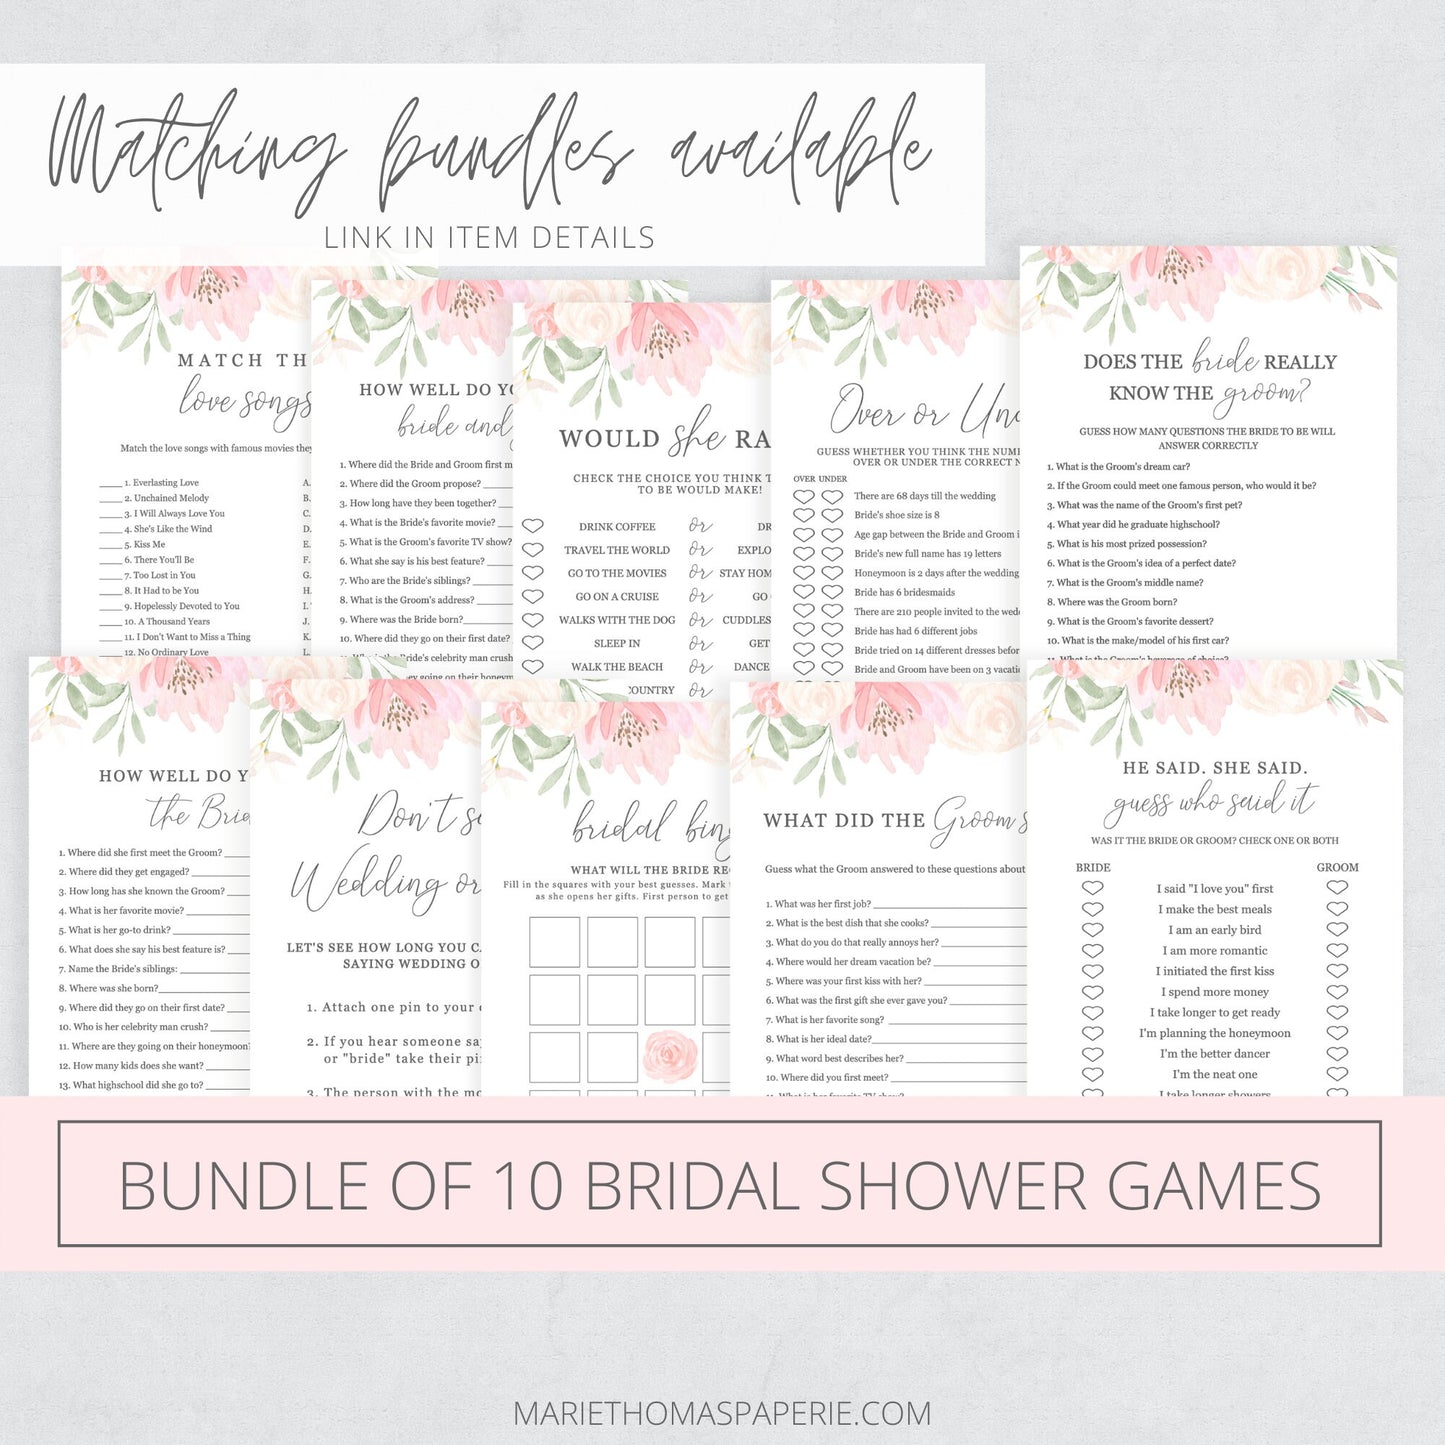 Editable Pass the Poem Bridal Shower Games Bridal Poem Game Blush Template